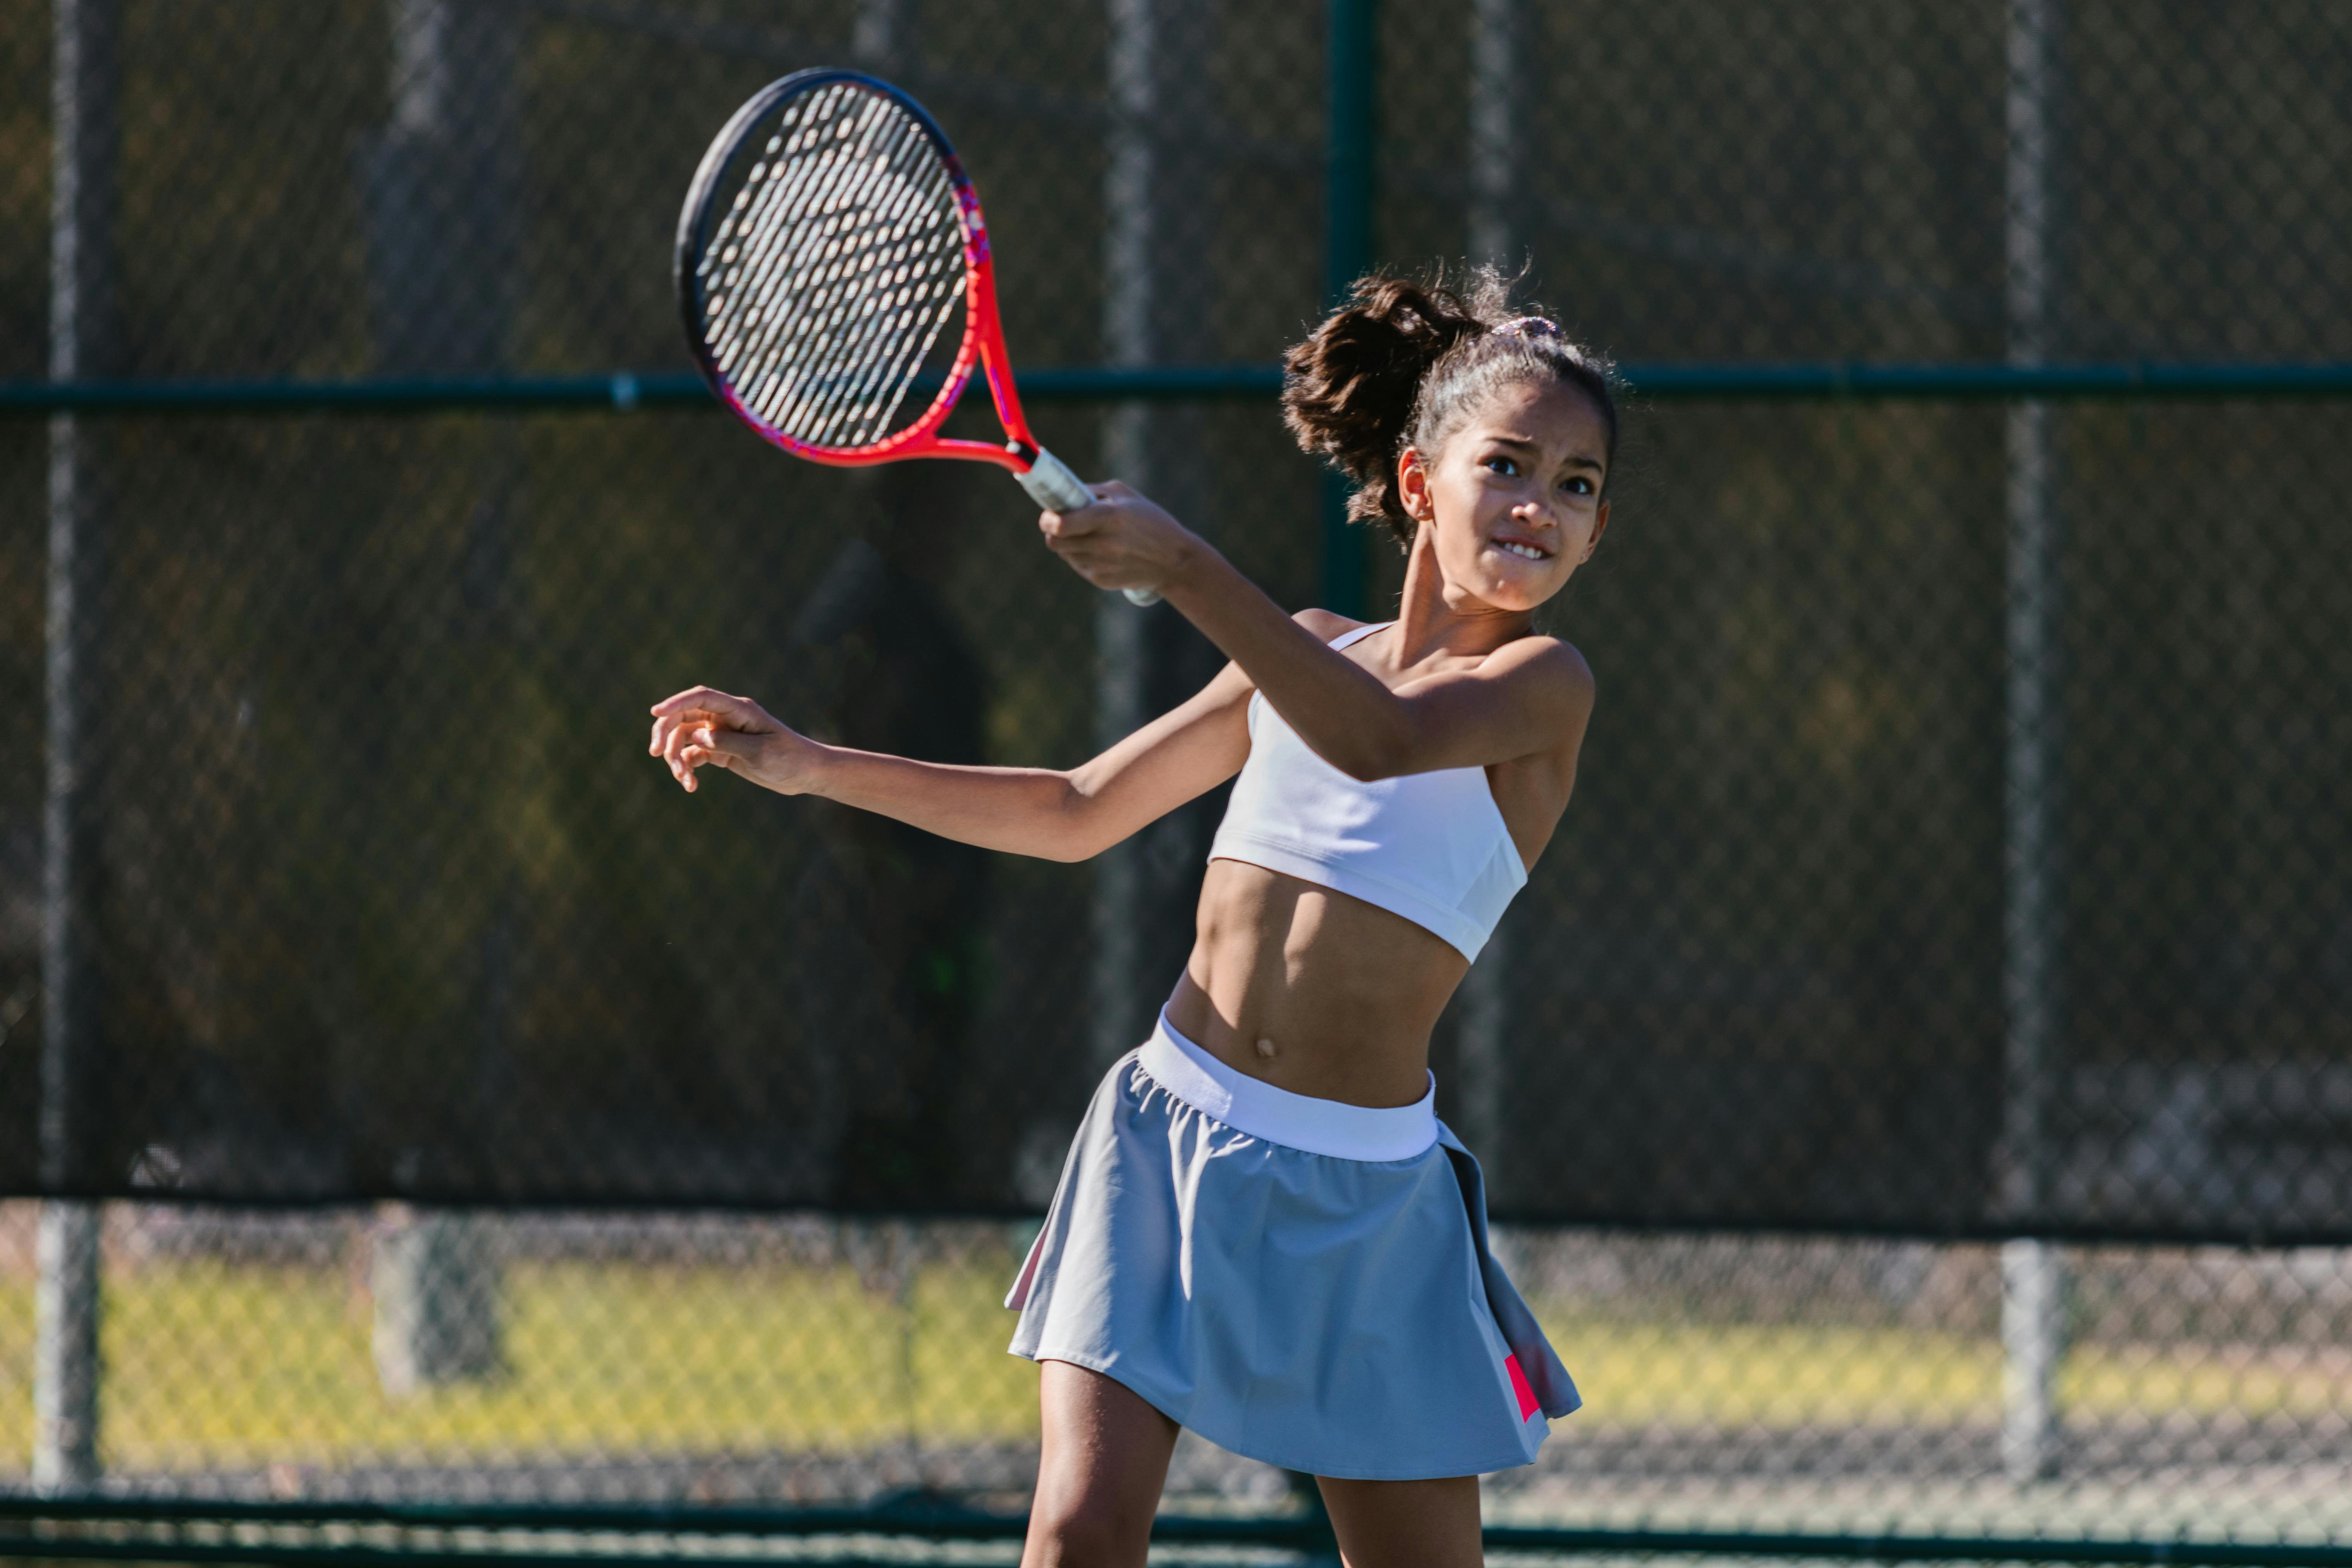 Chica jugando al tenis | Foto: Pexels